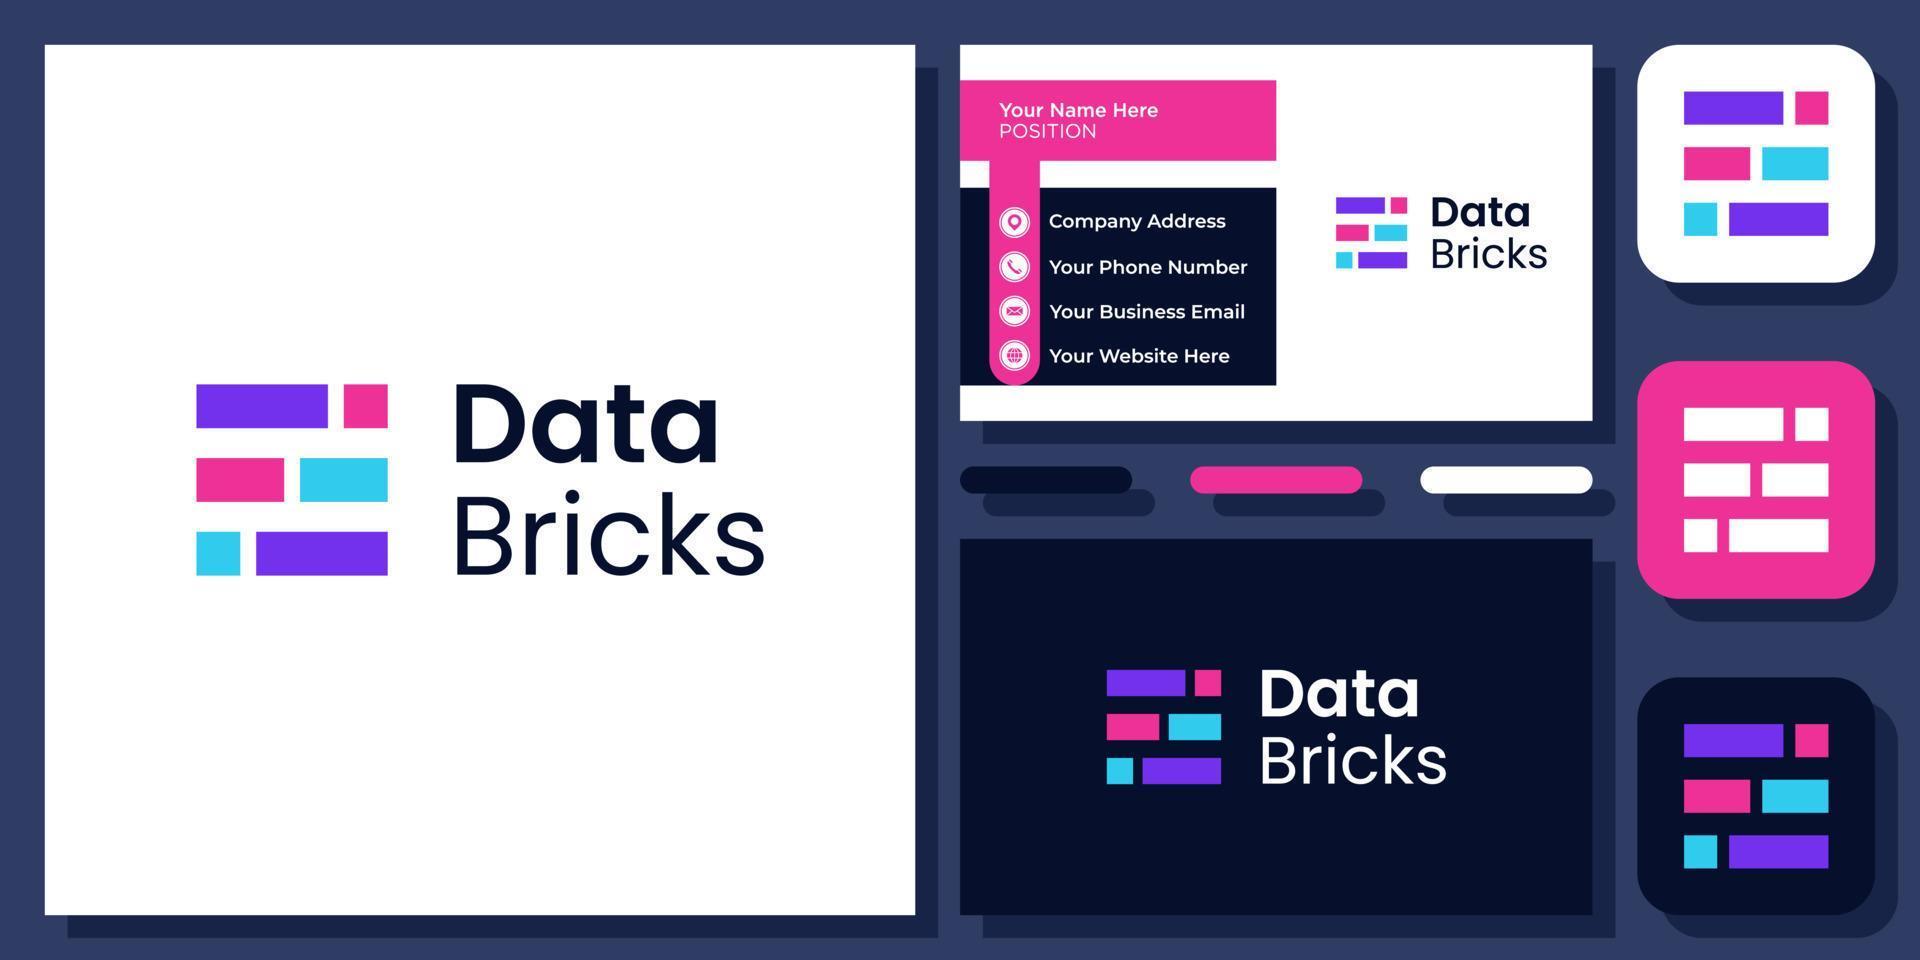 Bricks Data Technology Brick Database Network Internet Wall Vector Logo Design with Business Card